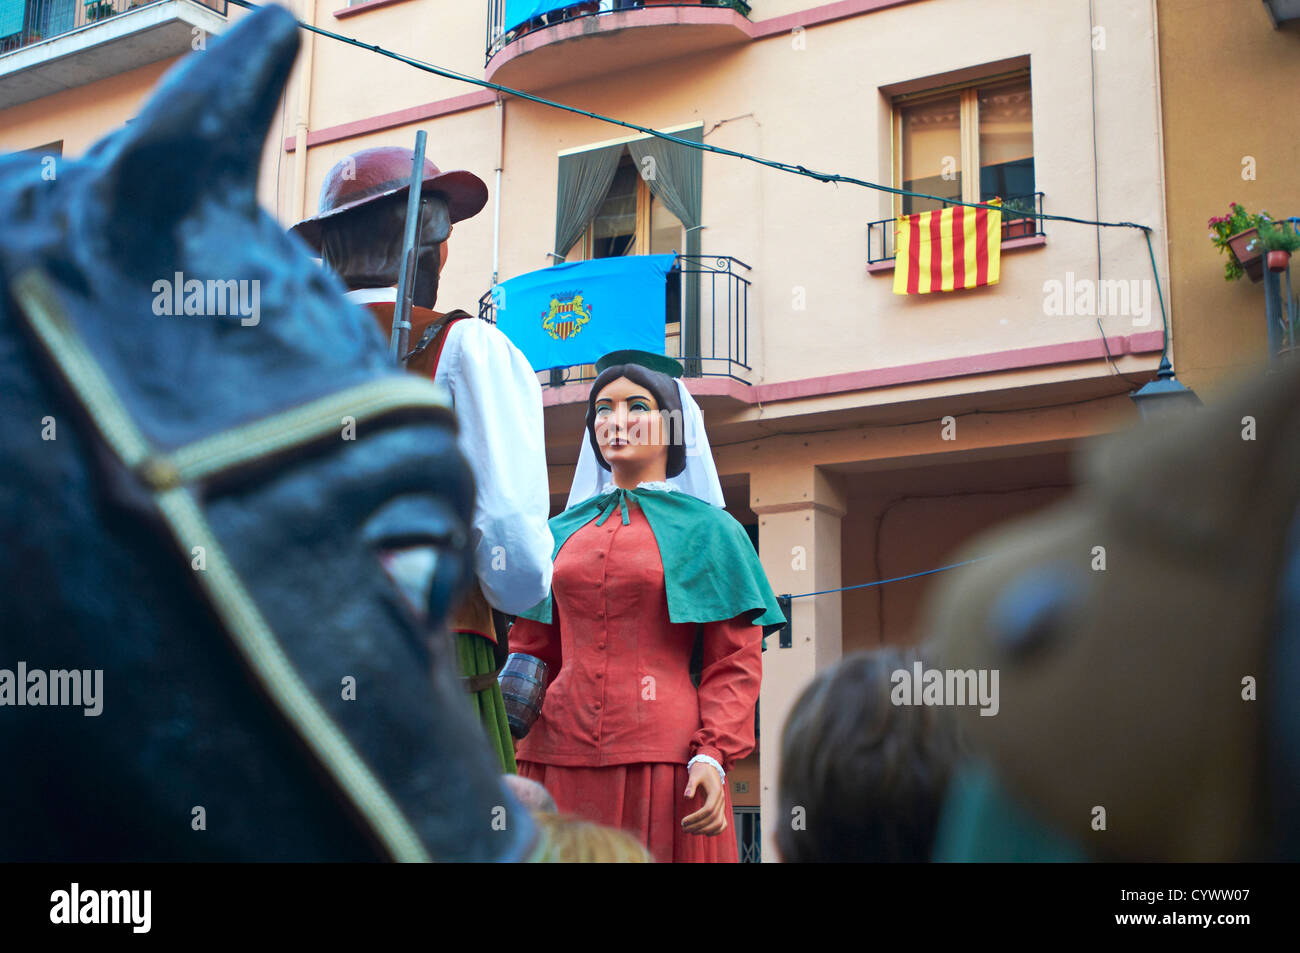 -Traditions and Festivities, Cambrils Village- Tarragona, Catalonia, Spain. Stock Photo